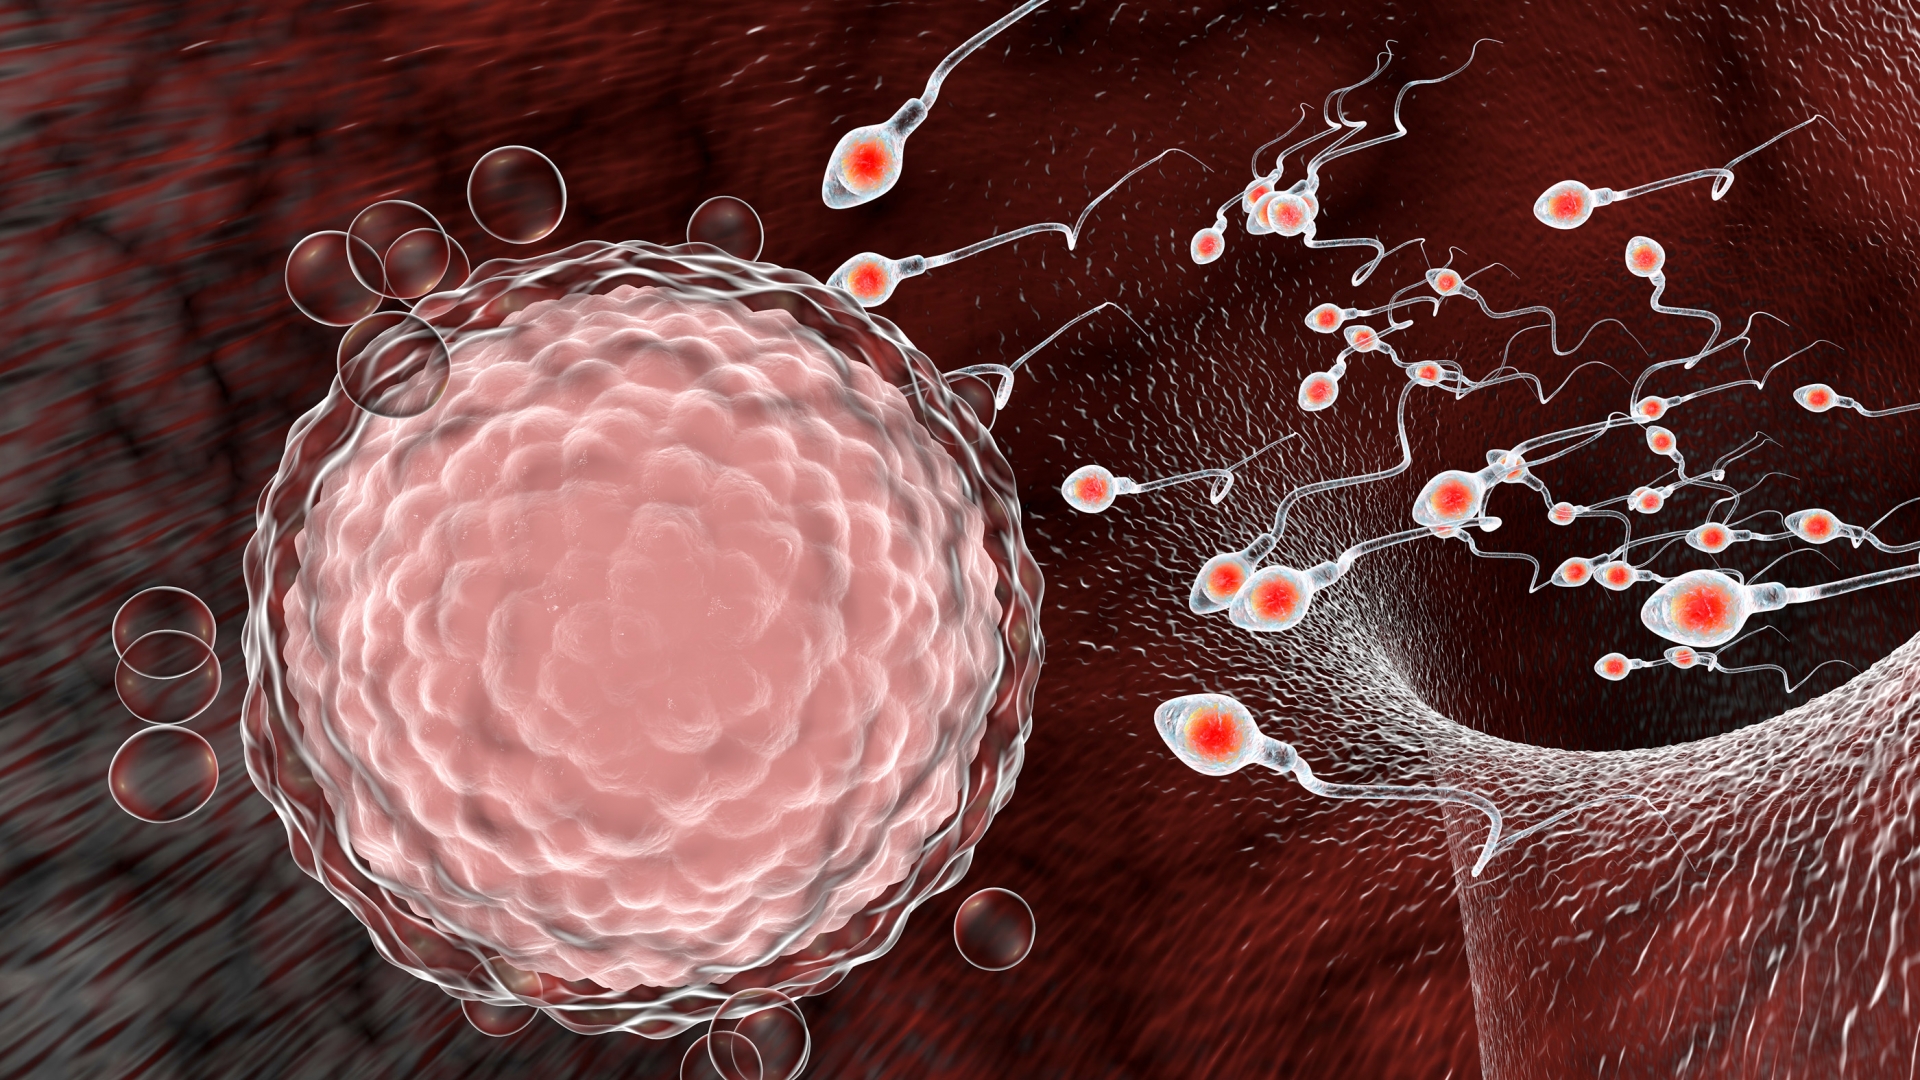 covid 19 update coronavirus found in sperm samples chinese doctors say